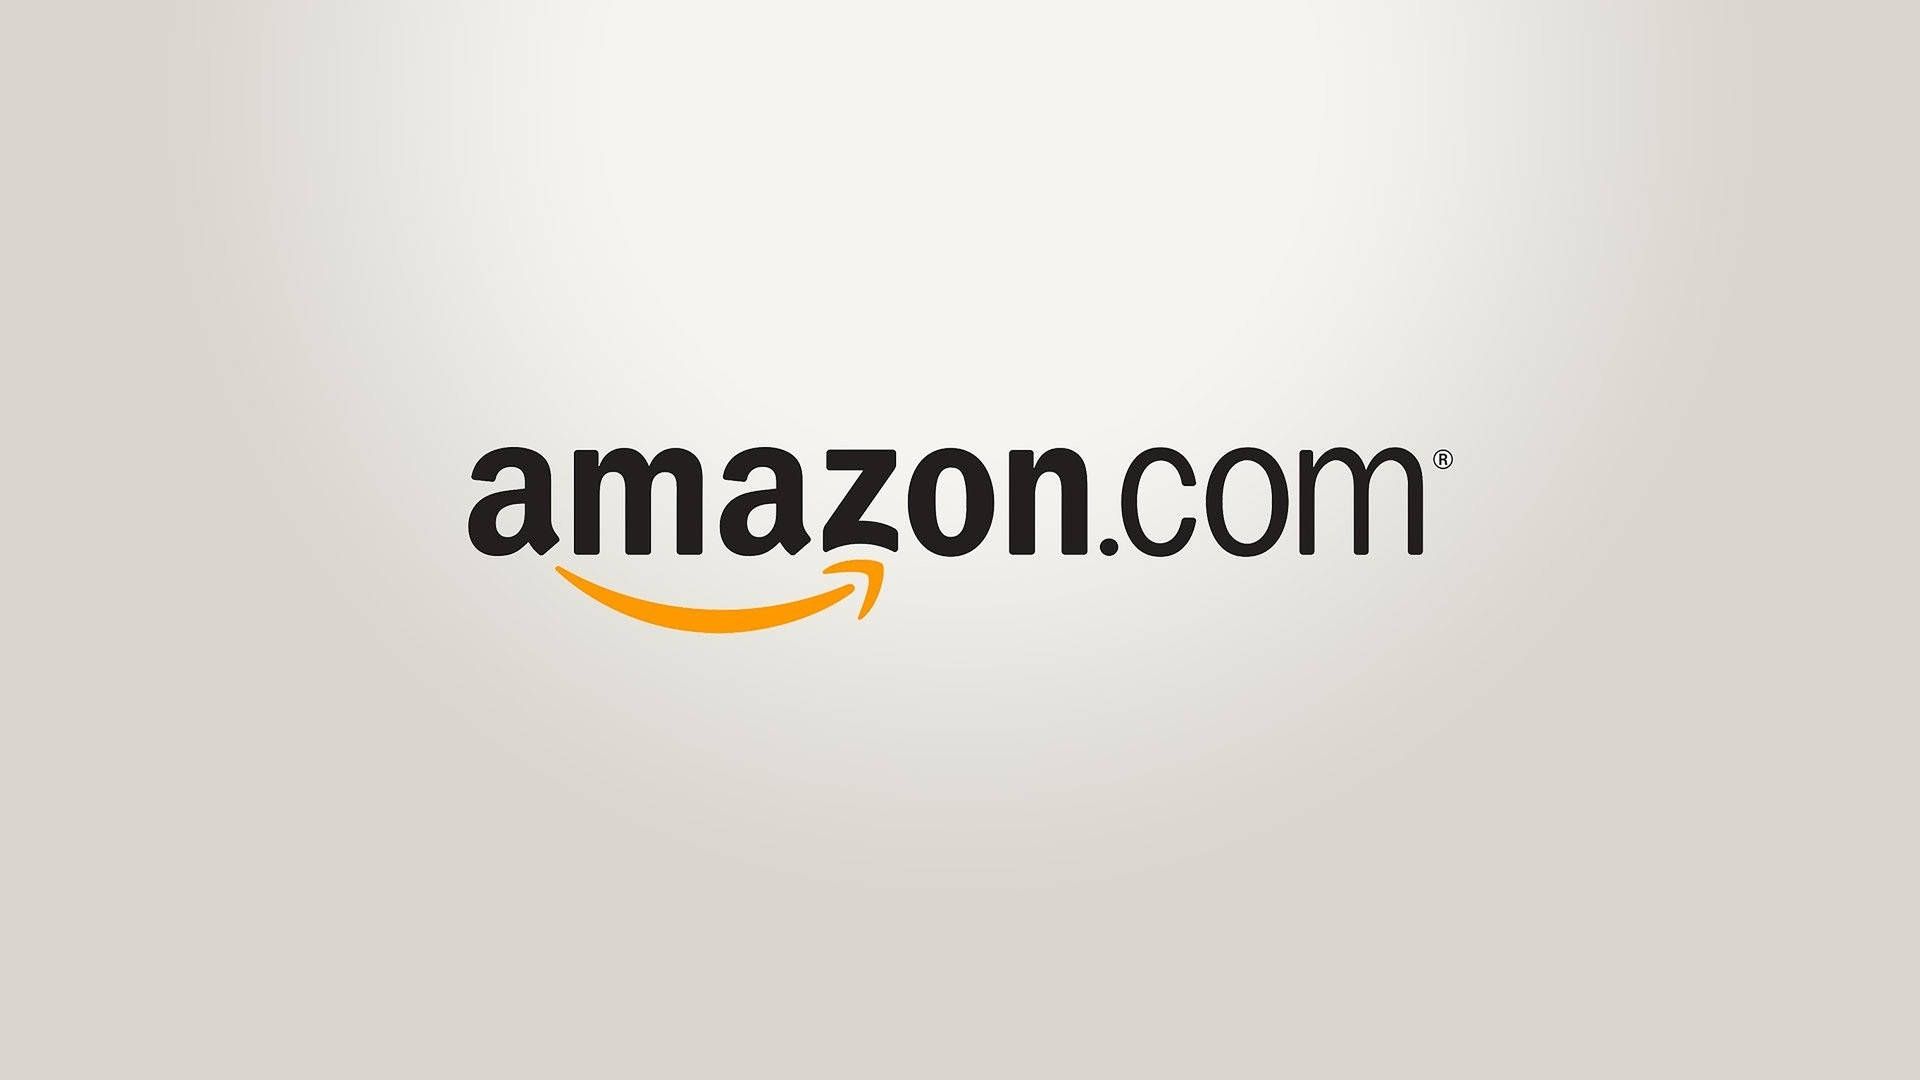  Amazon Hintergrundbild 1920x1080. Free Amazon Wallpaper Downloads, Amazon Wallpaper for FREE